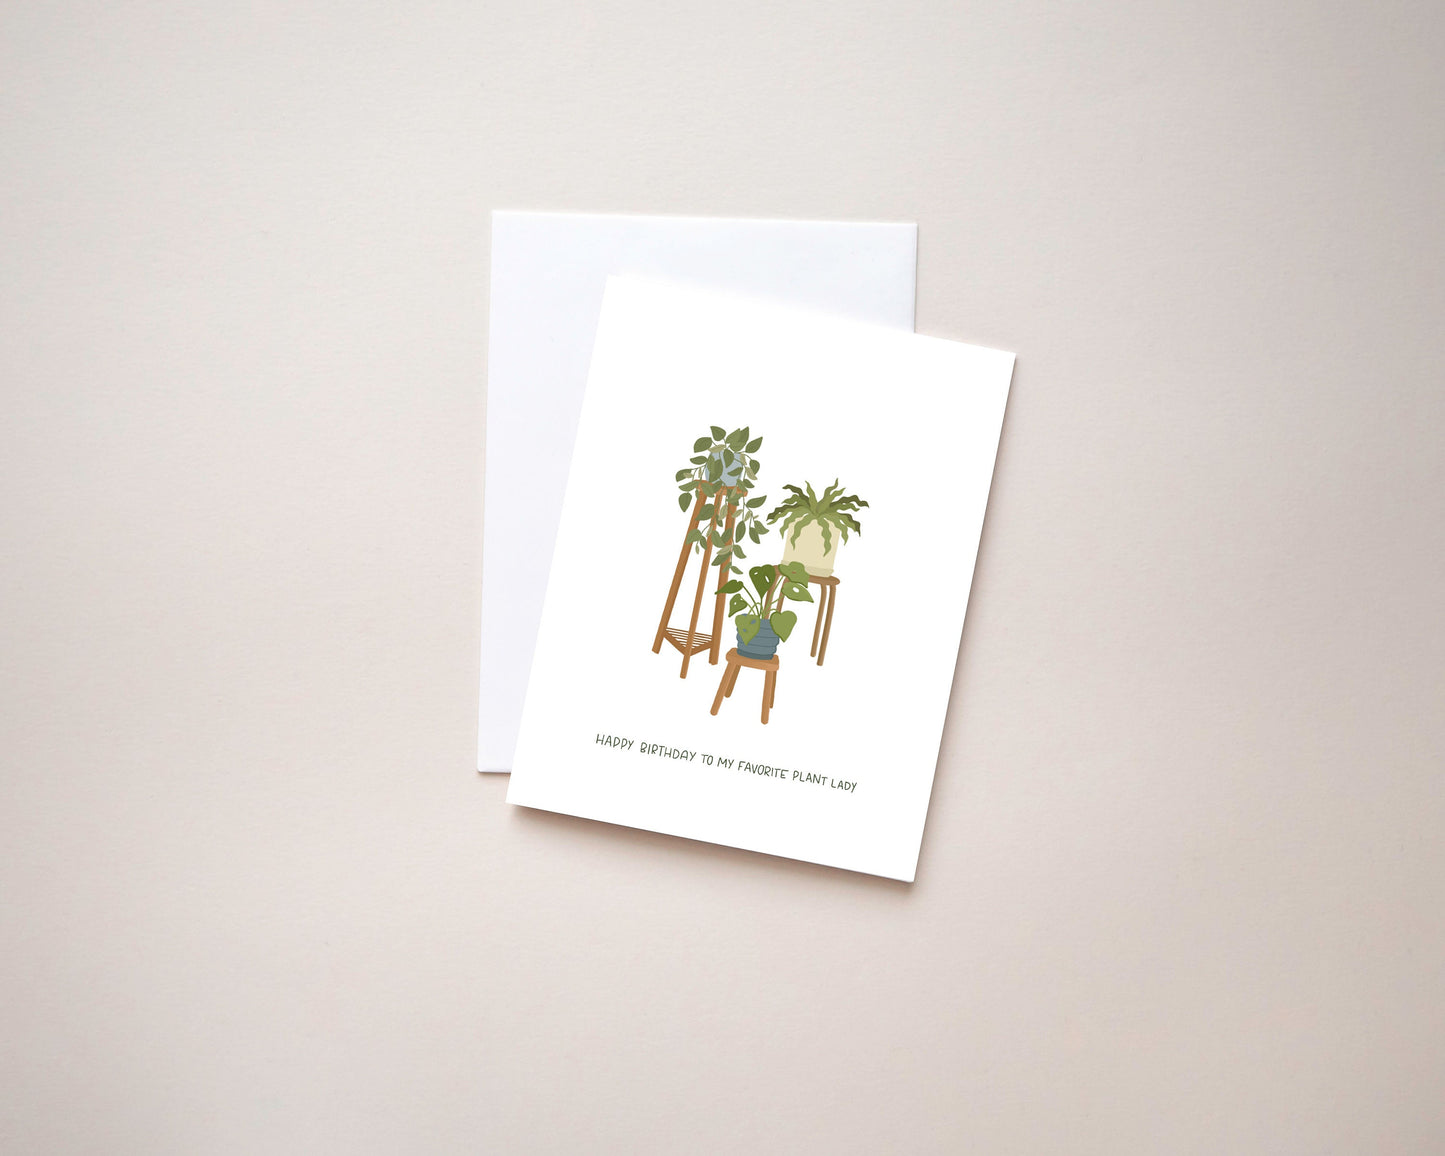 Happy birthday card | birthday plants greeting card | birthday plant lady card | handmade greeting card | illustrated plants card